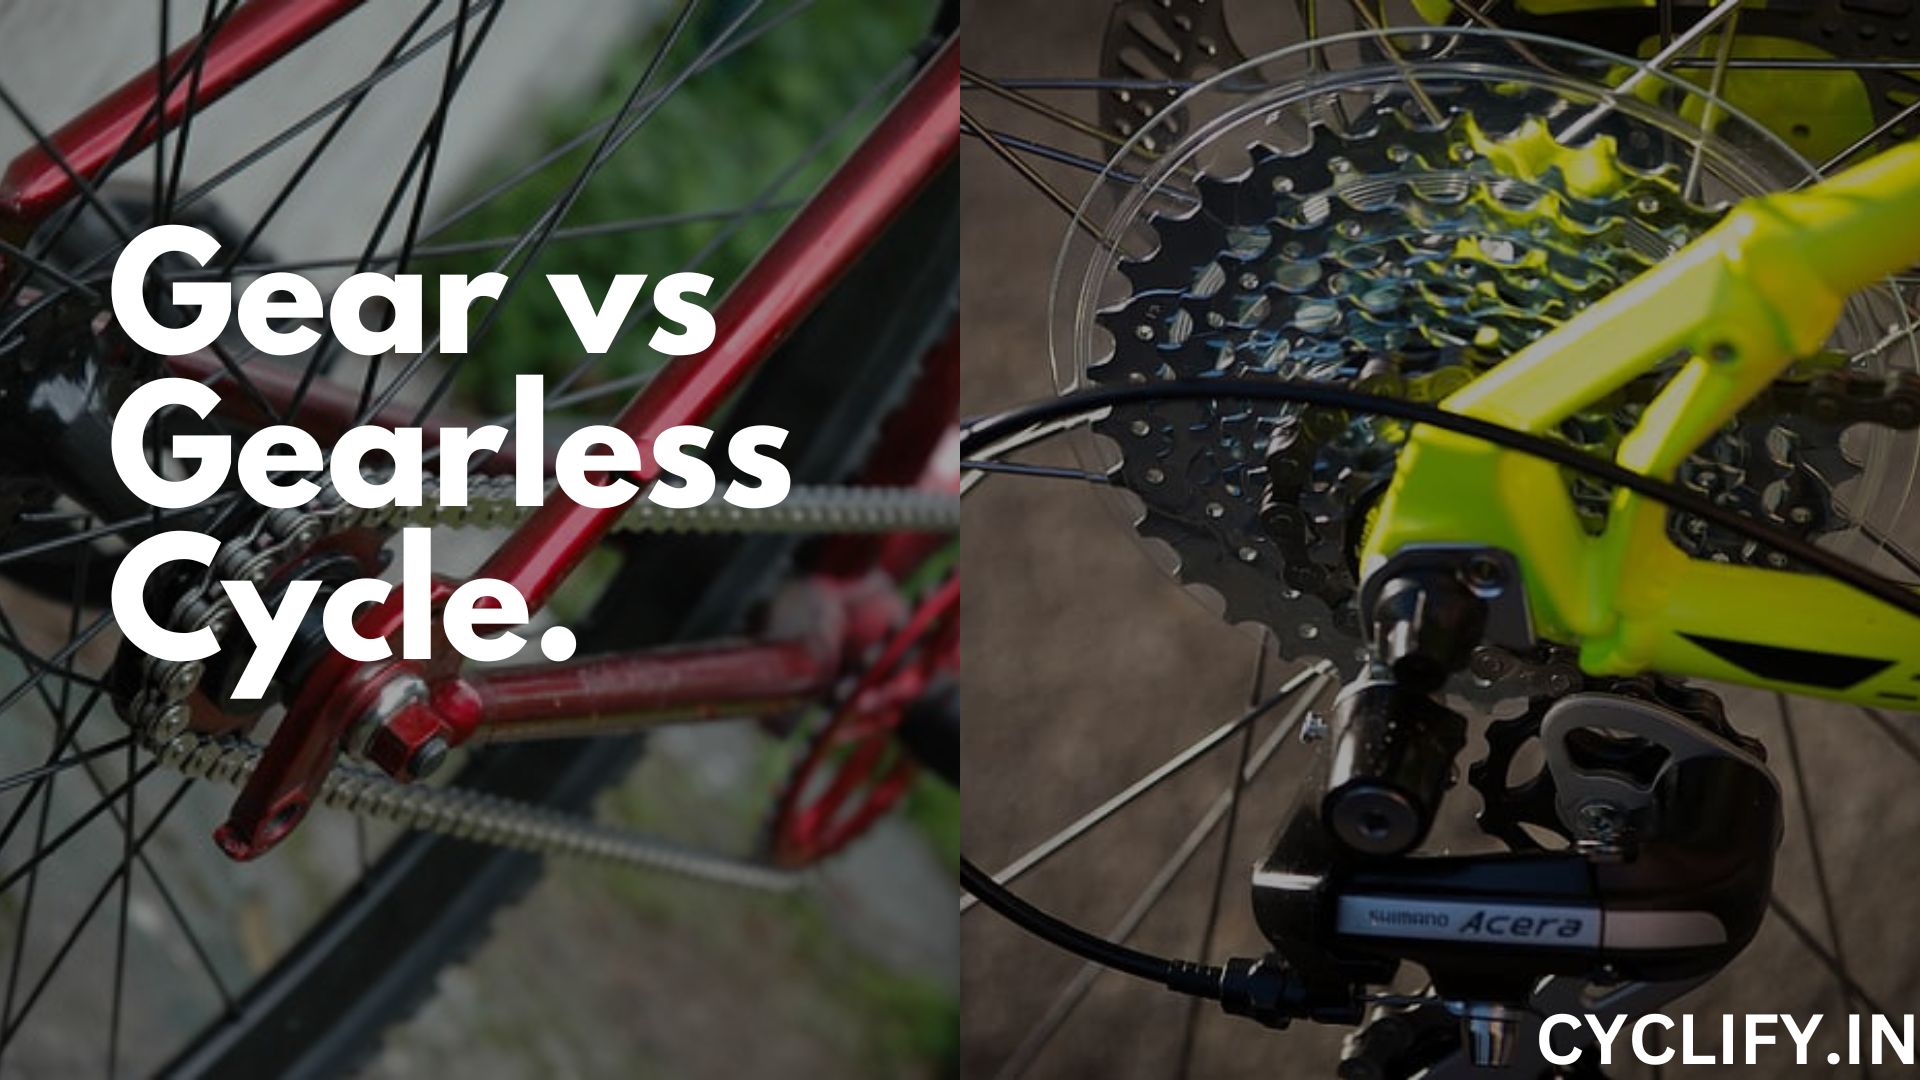 Gear vs Gearless Cycle